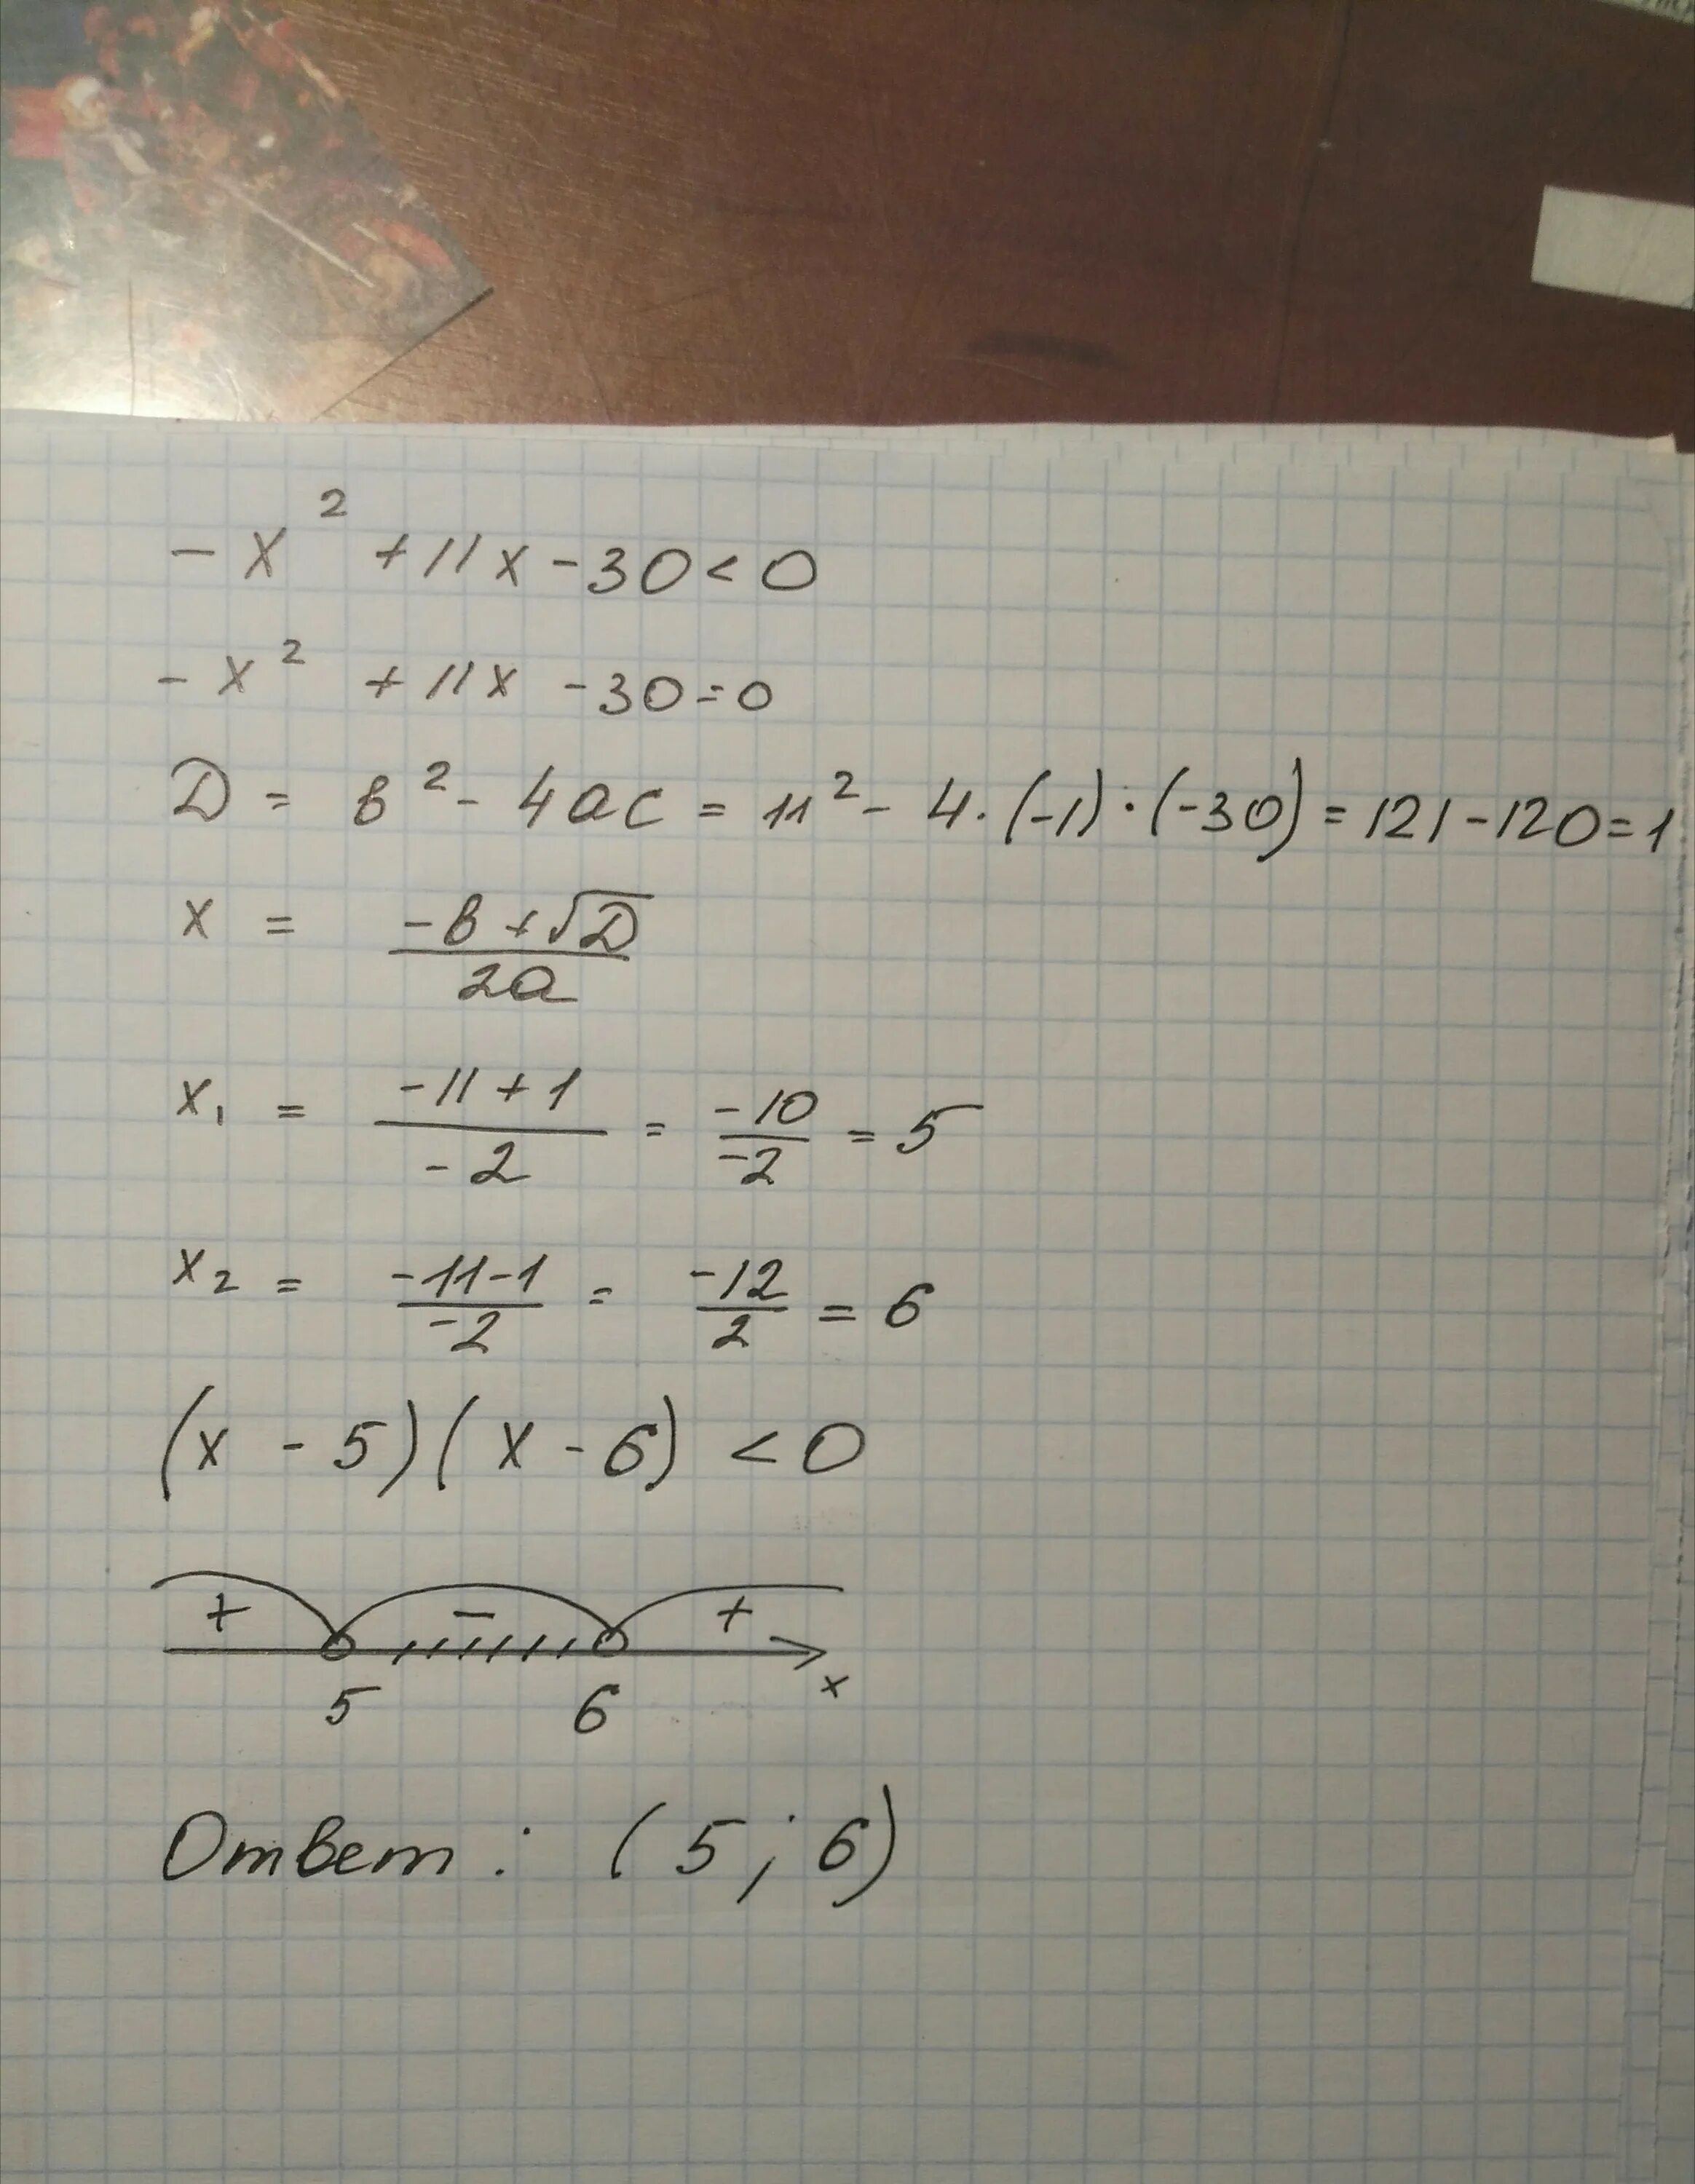 Решите неравенство x2-7x-30>0. X2-11x+30=0 решение. Х²-7х-30>0. X2-11x+30 0. 4x 30 0